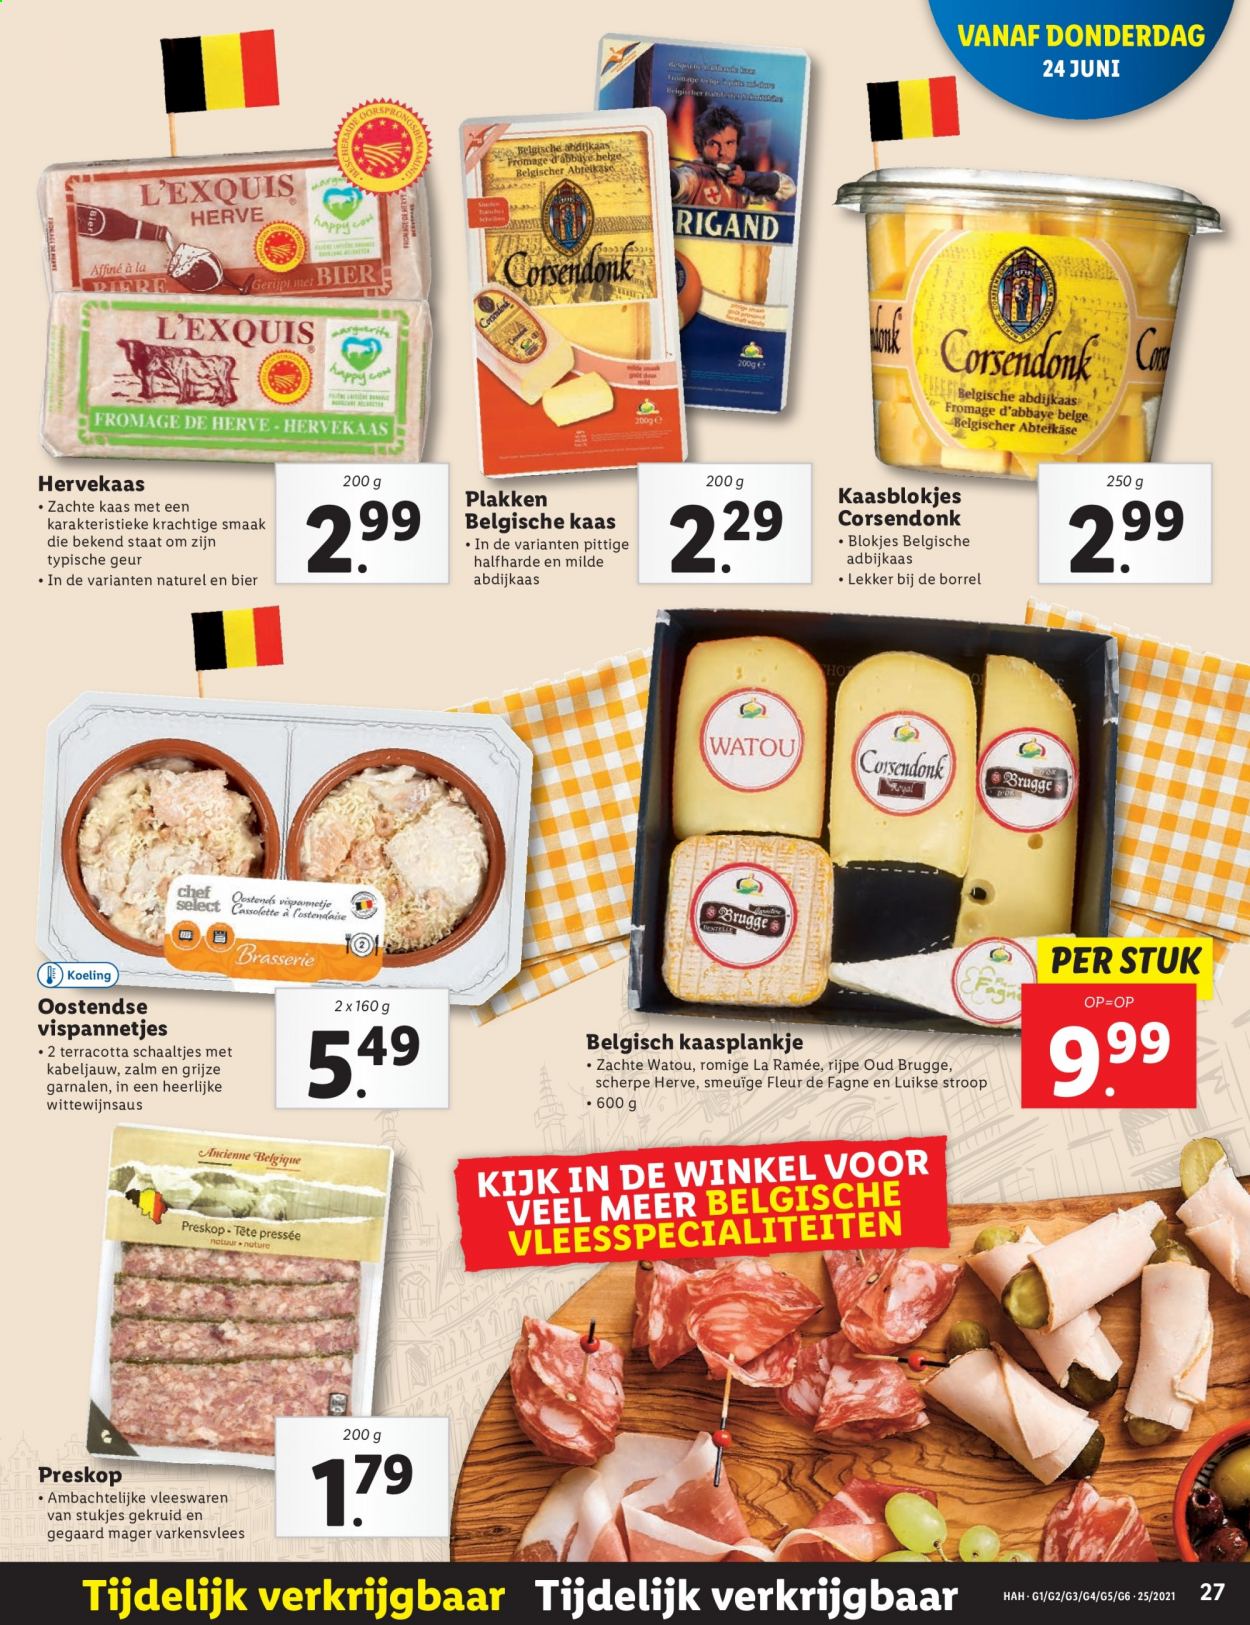 thumbnail - Lidl-aanbieding - 21-6-2021 - 27-6-2021 -  producten in de aanbieding - varkensvlees, bier, kabeljauw, zalm, garnalen, Herve, kaas, kaasblokjes, La Ramée, Oud Brugge, Fleur de Fagne, schaaltjes. Pagina 27.